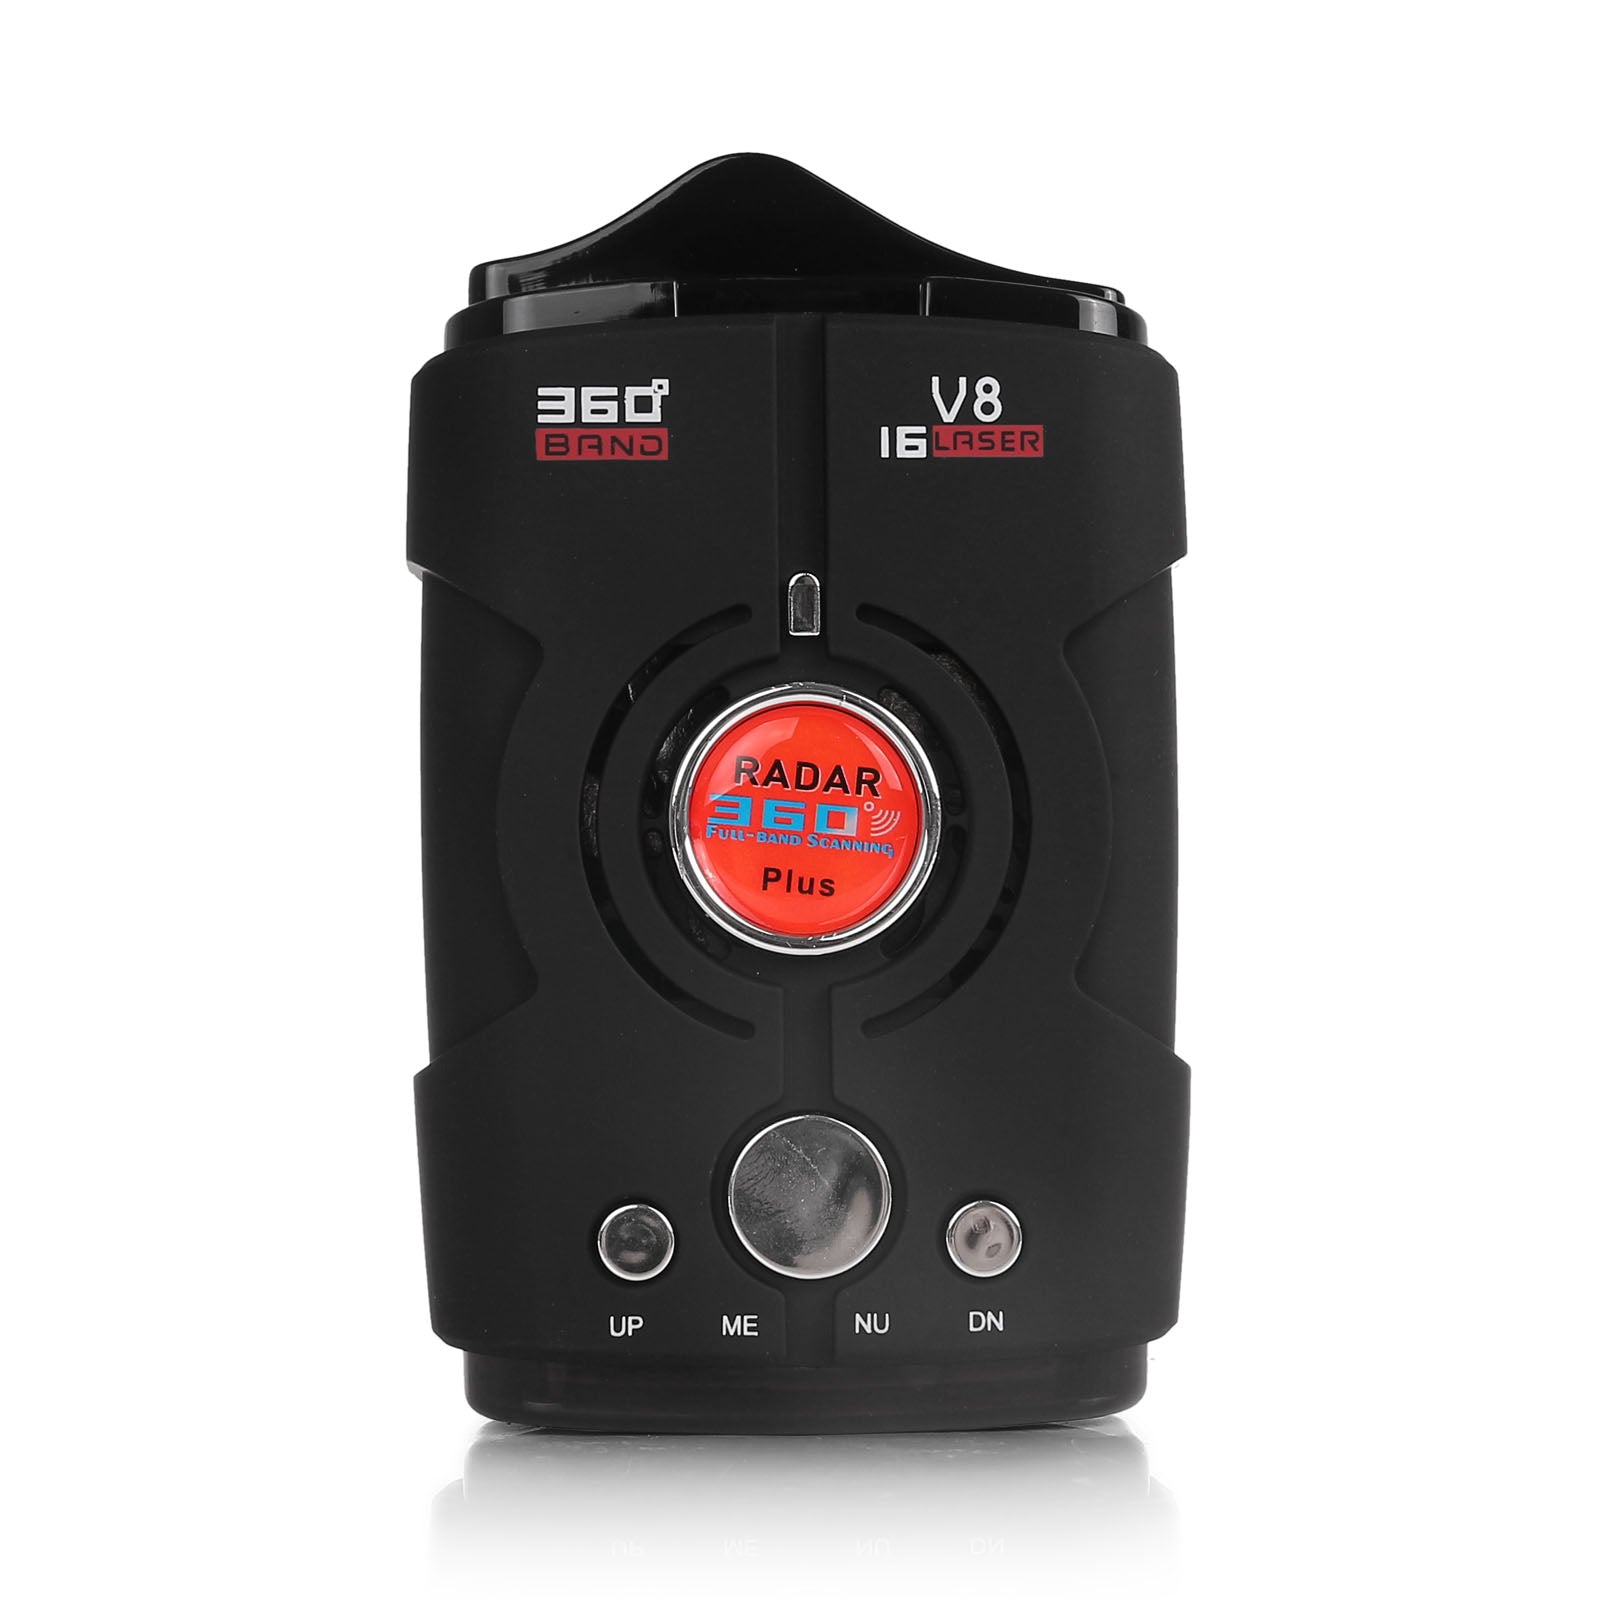 V8 Car Radar Detector Speed Camera Detectors